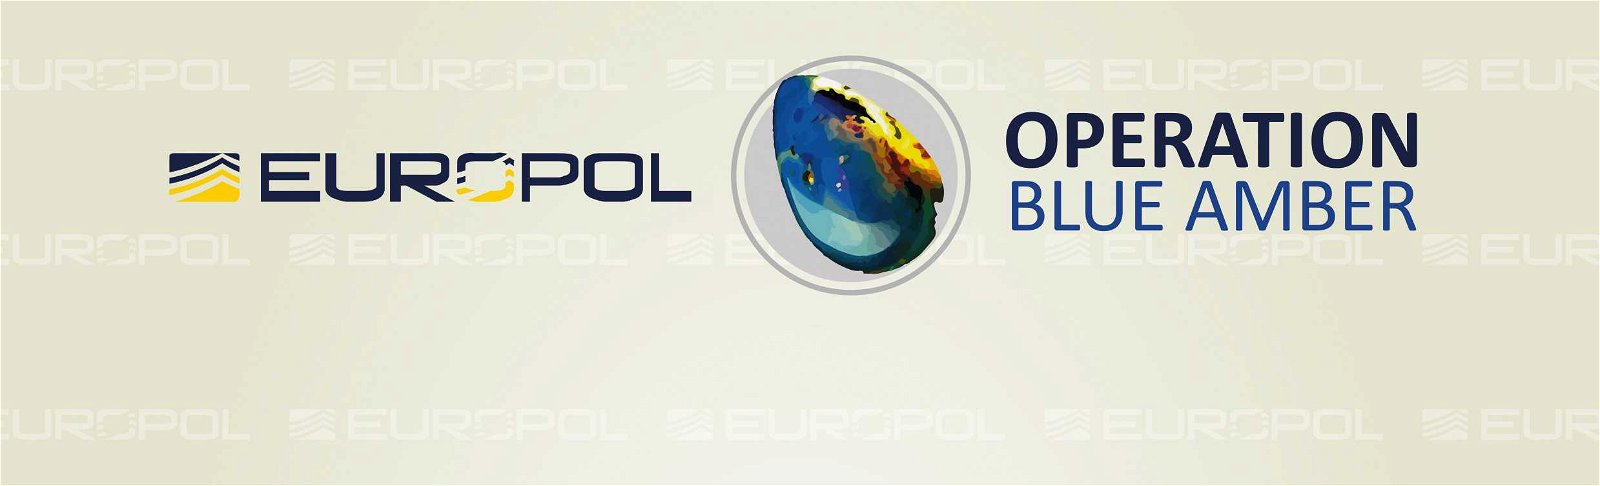 Europol Operation Blue amber 1